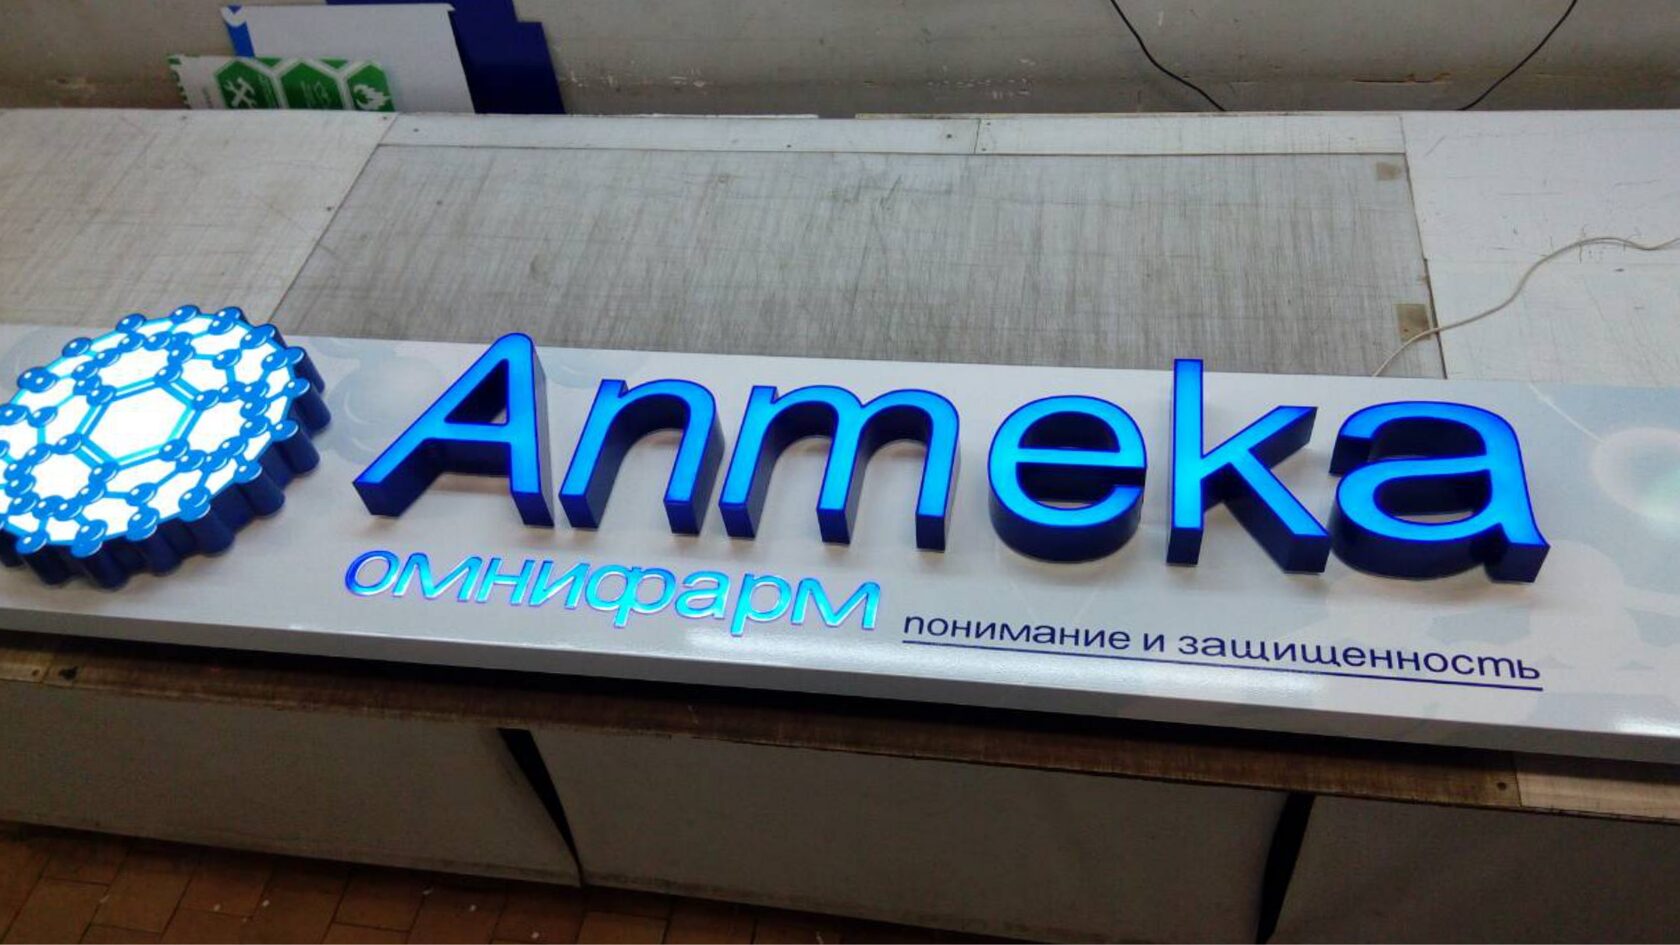 Омнифарм Хабаровск Интернет Магазин Каталог